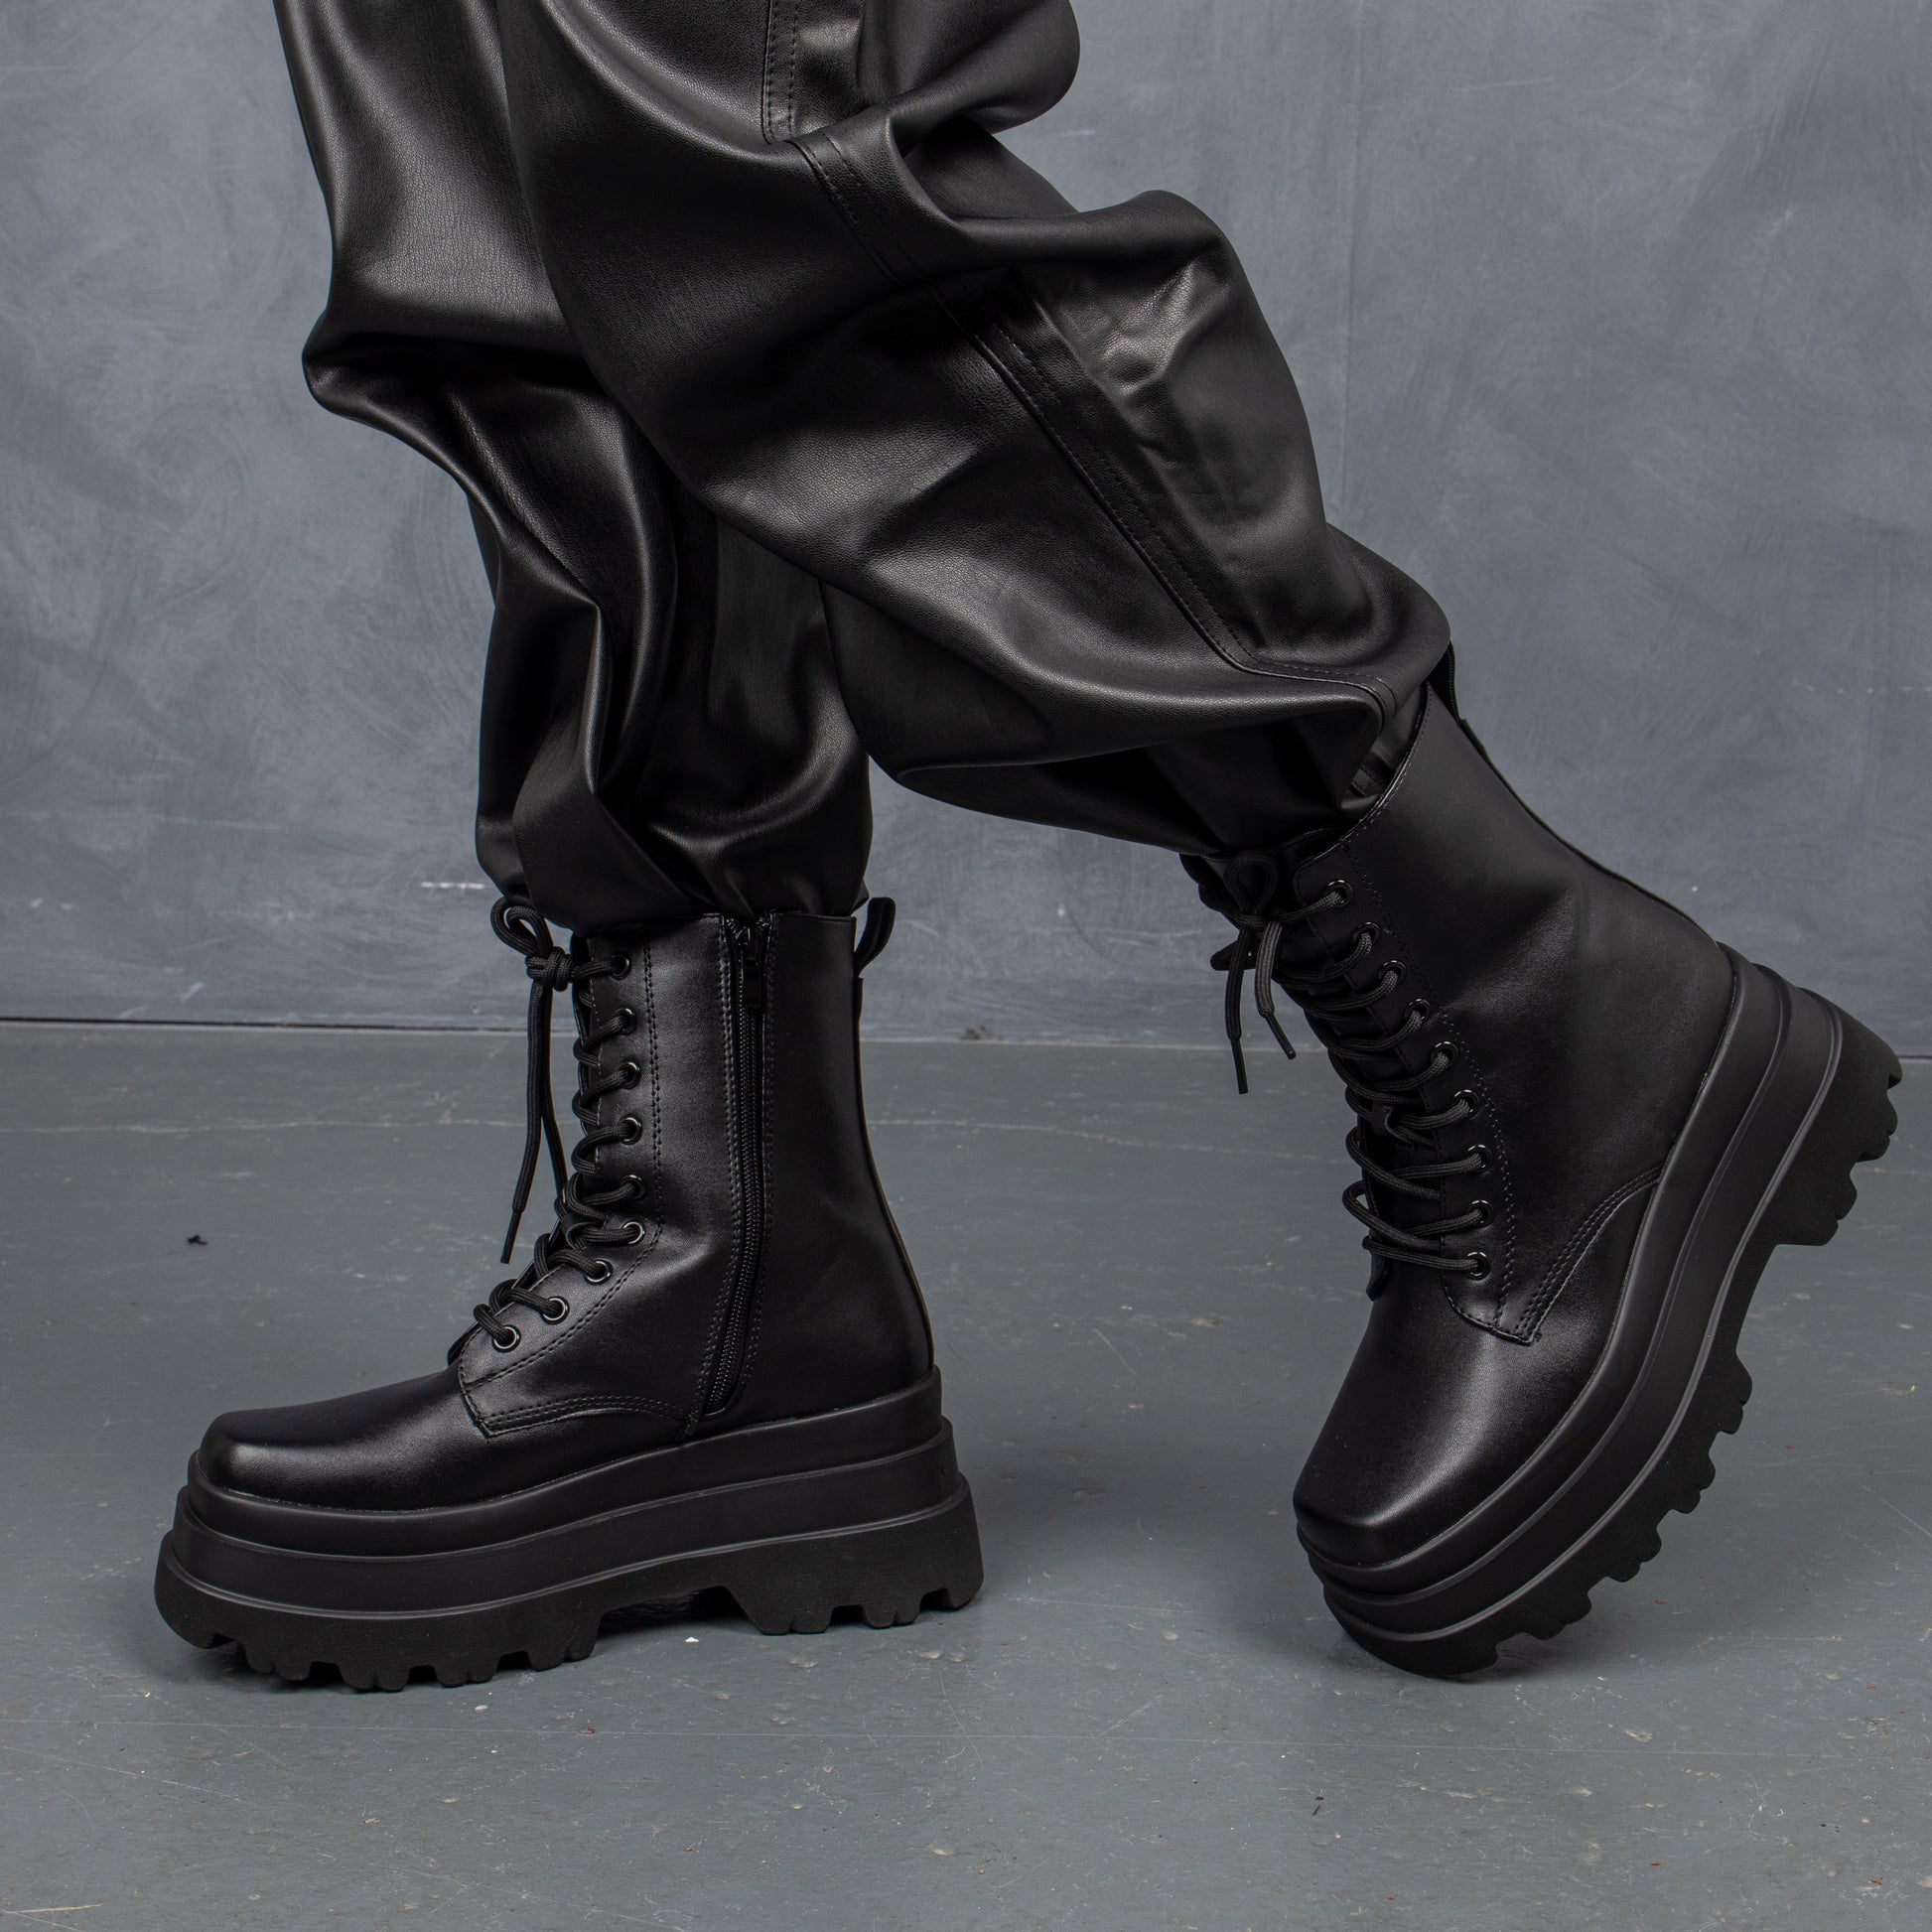 Deathwatch Trident Platform Boots - Ankle Boots - KOI Footwear - Black - Model Left View